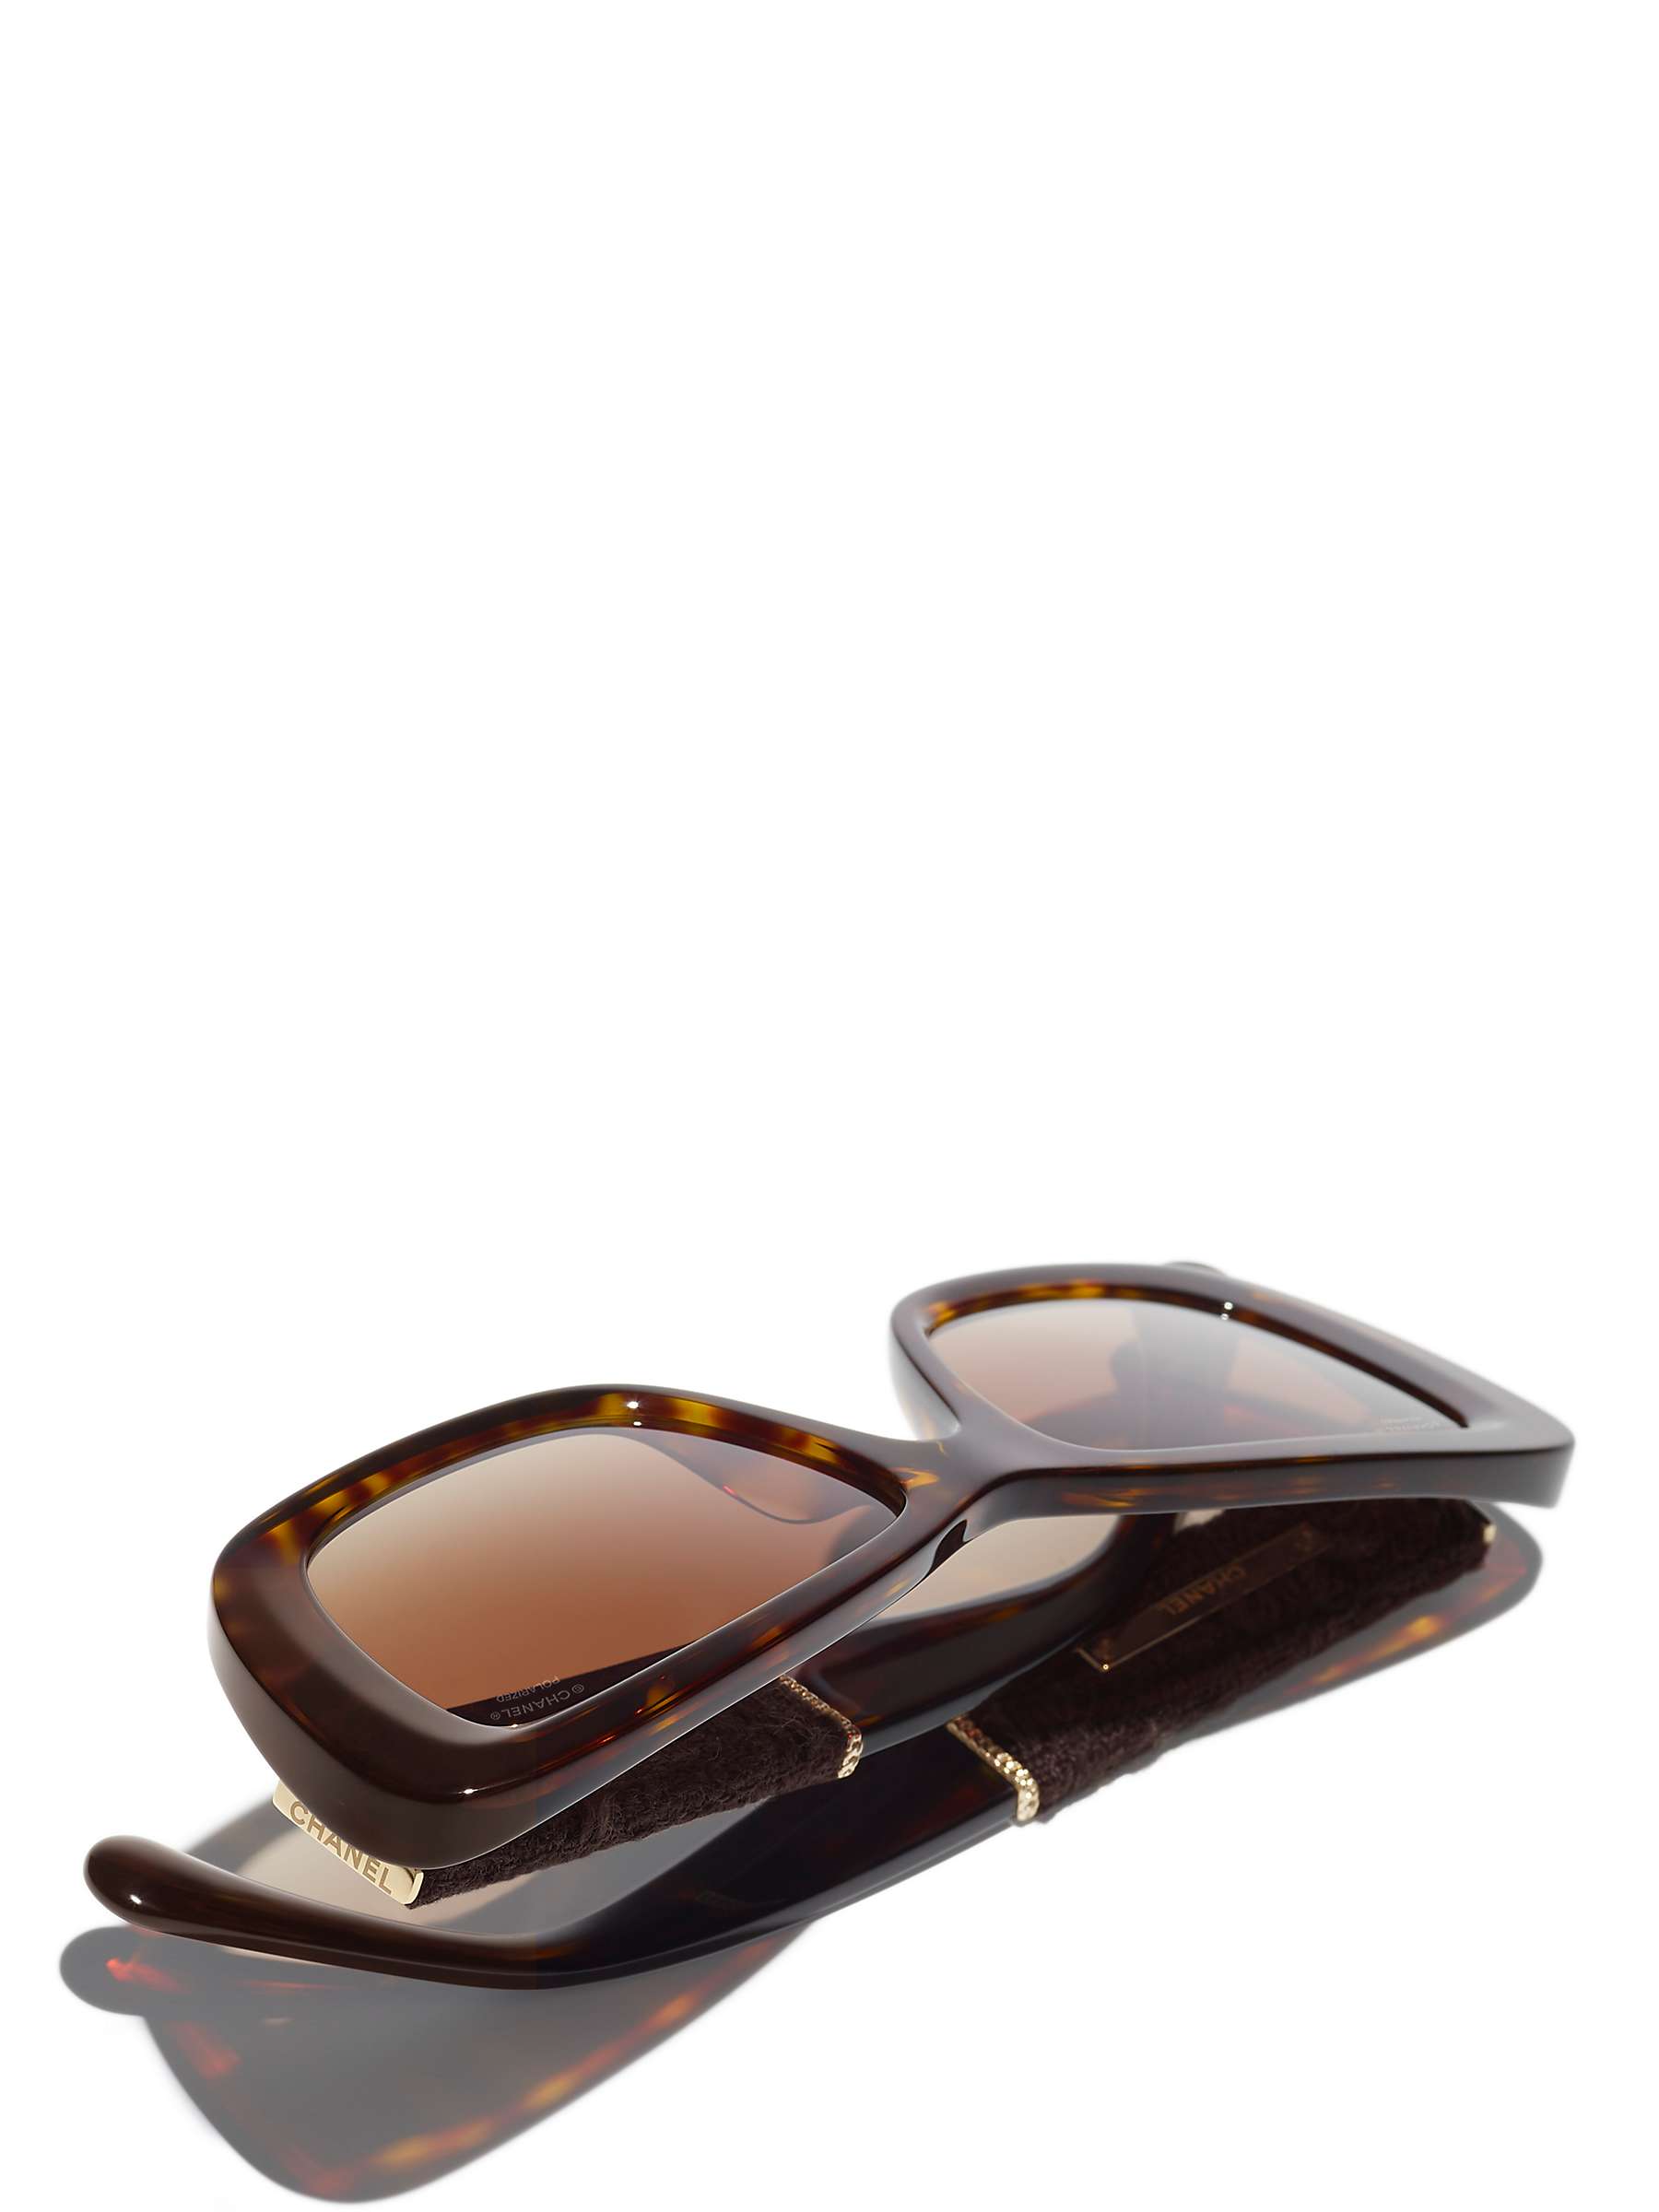 Buy CHANEL Rectangular Sunglasses CH5514 Dark Havana/Brown Gradient Online at johnlewis.com